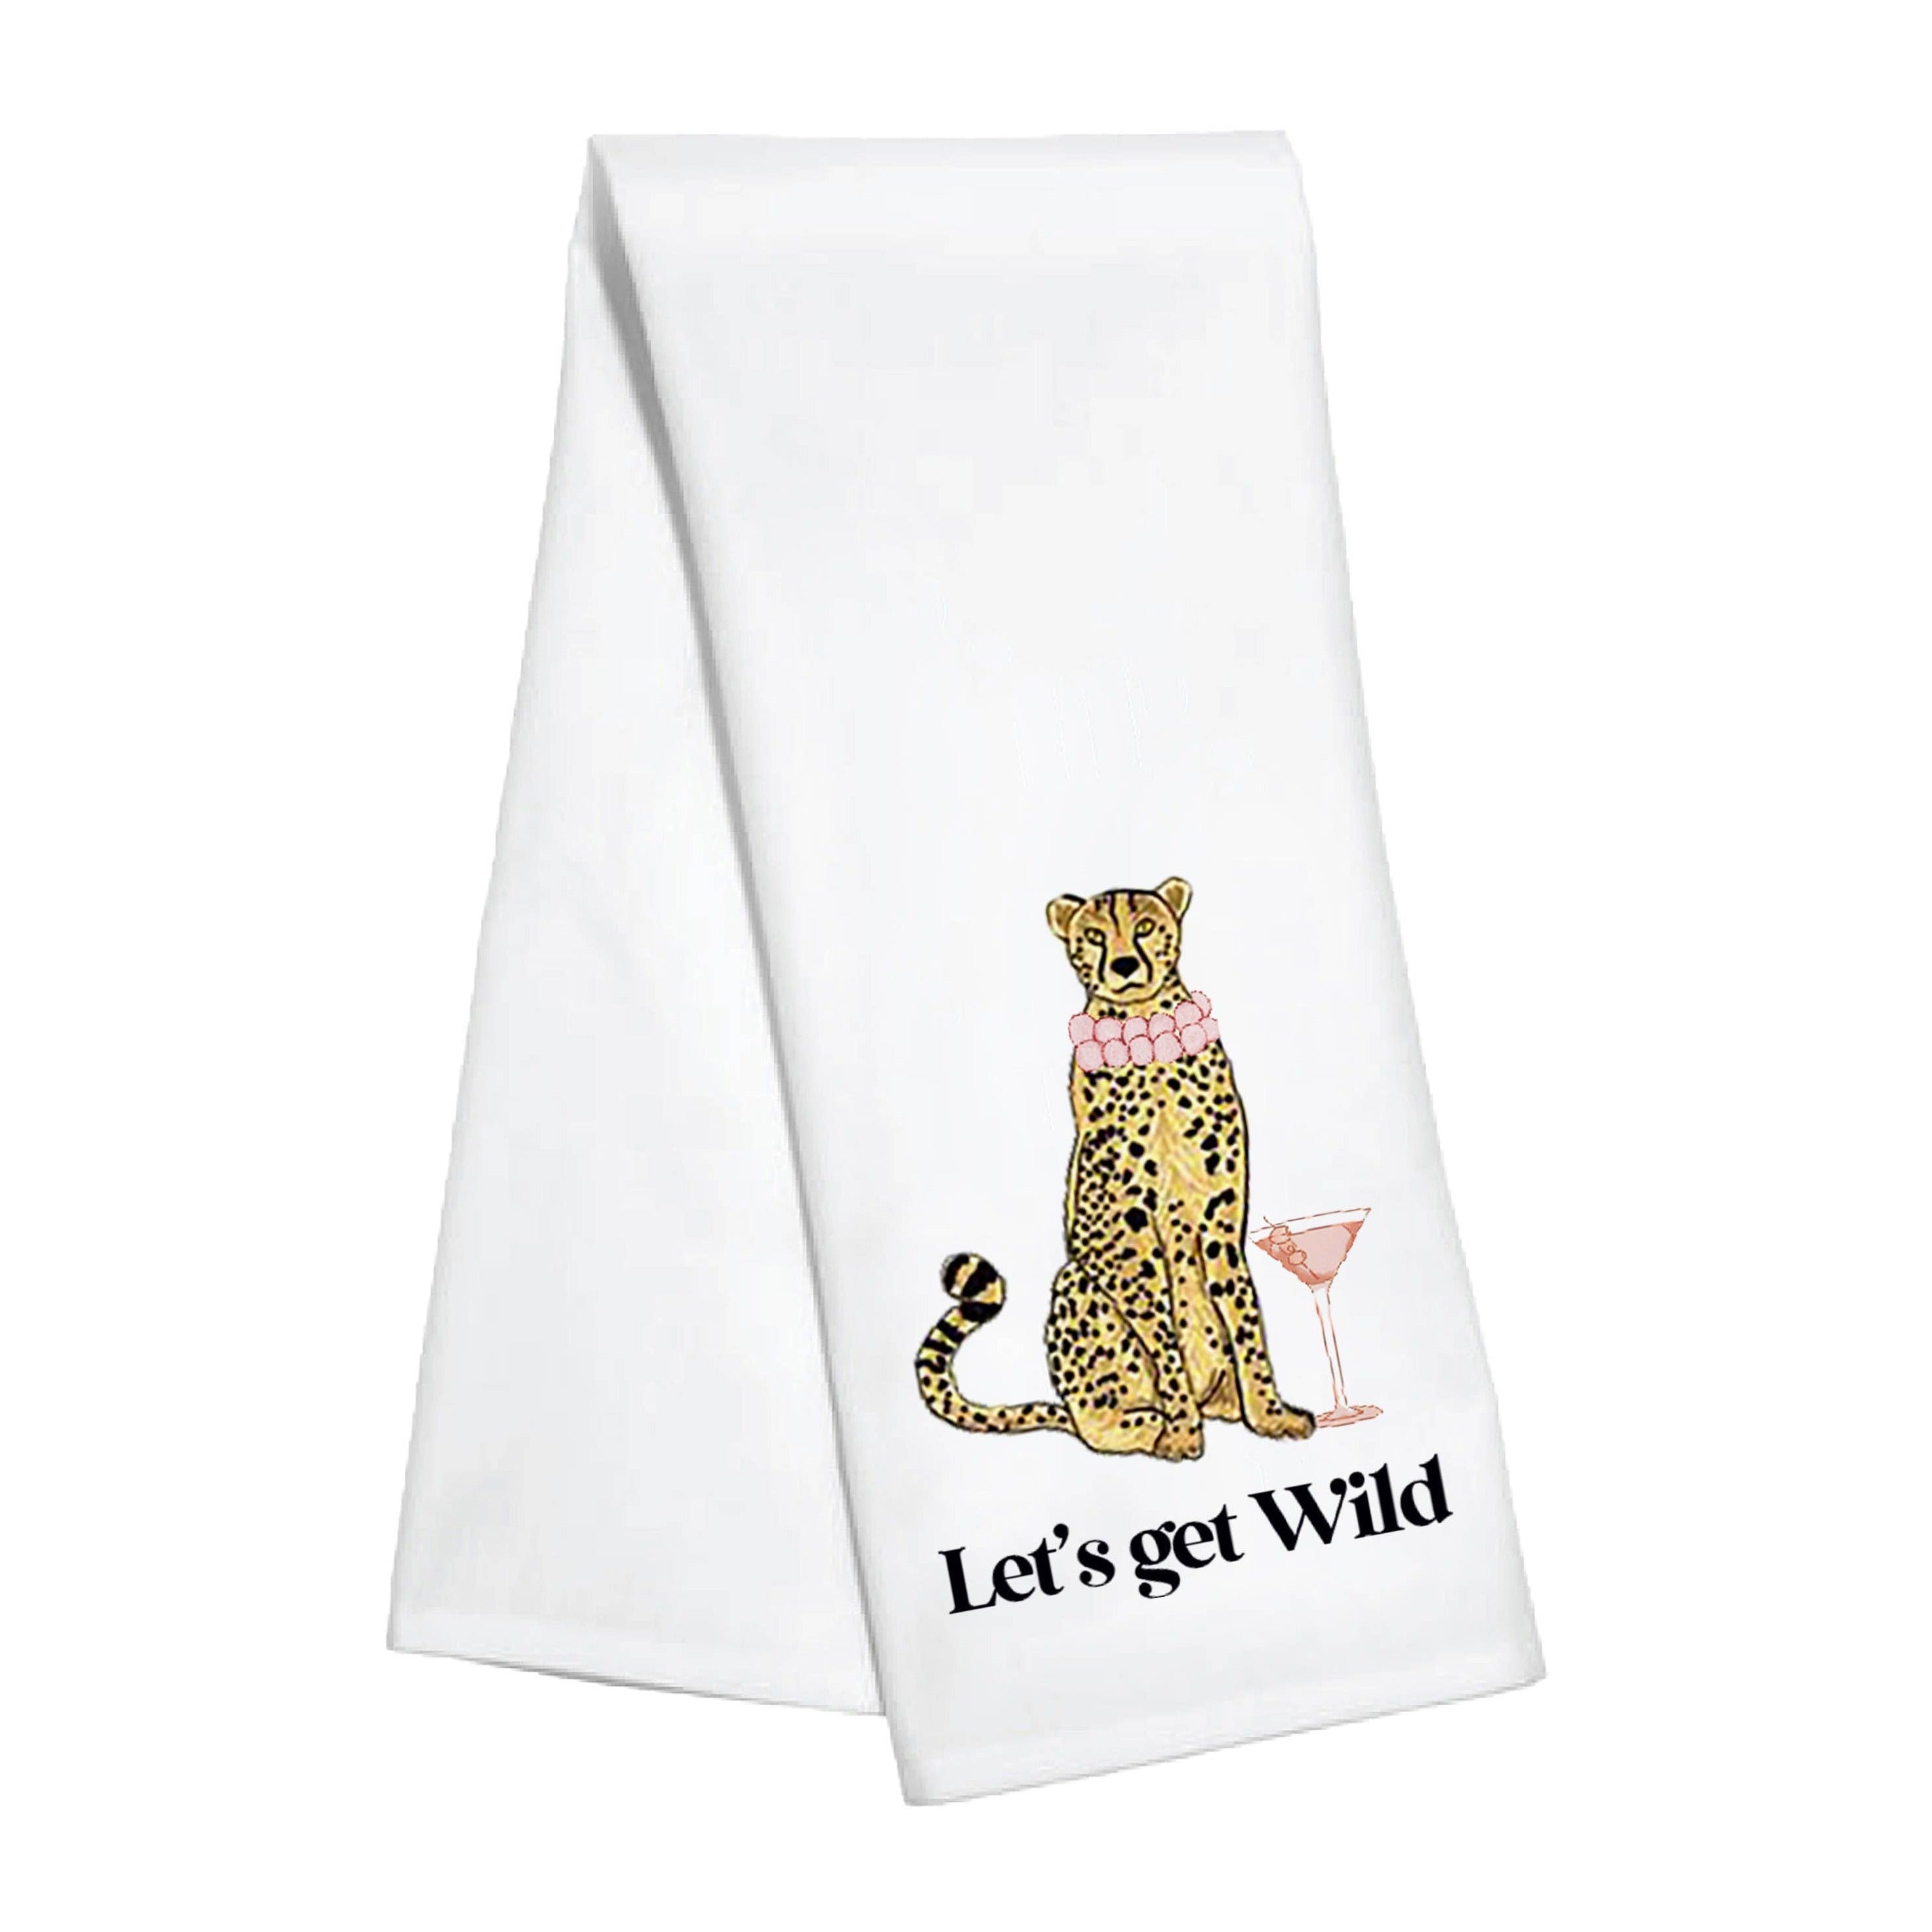 Let's Get Wild Kitchen Towel front white | MILK MONEY milkmoney.co | white elephant gift ideas, gift, mother's day gift ideas, white elephant gift, gift shops near me